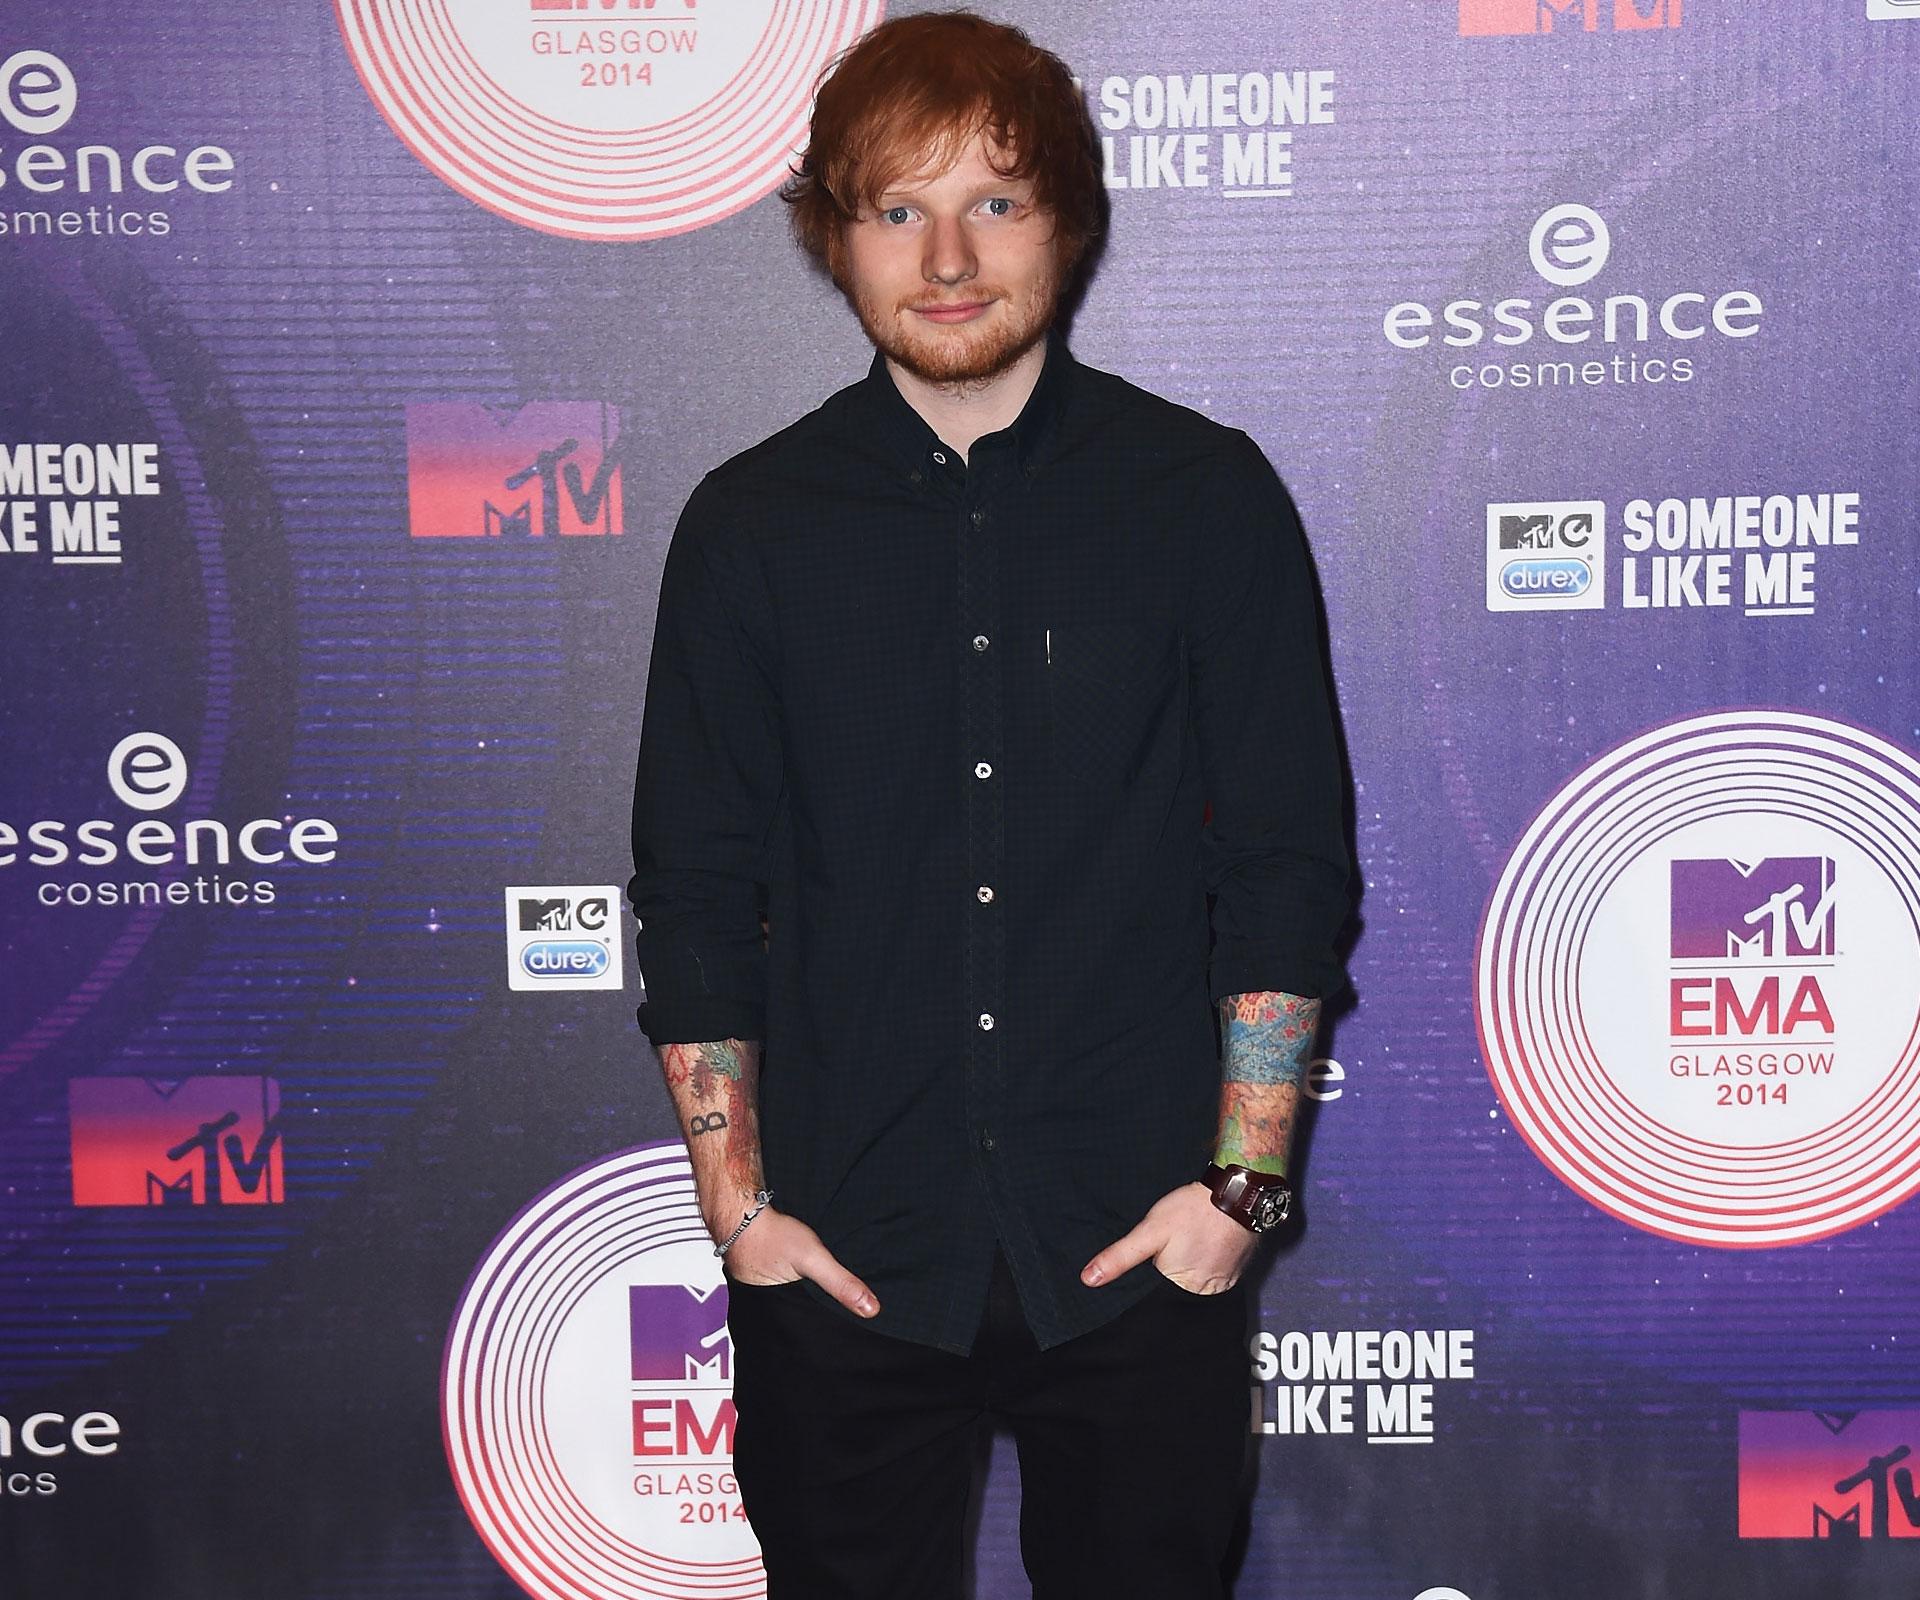 Ed Sheeran surprises fan singing his song